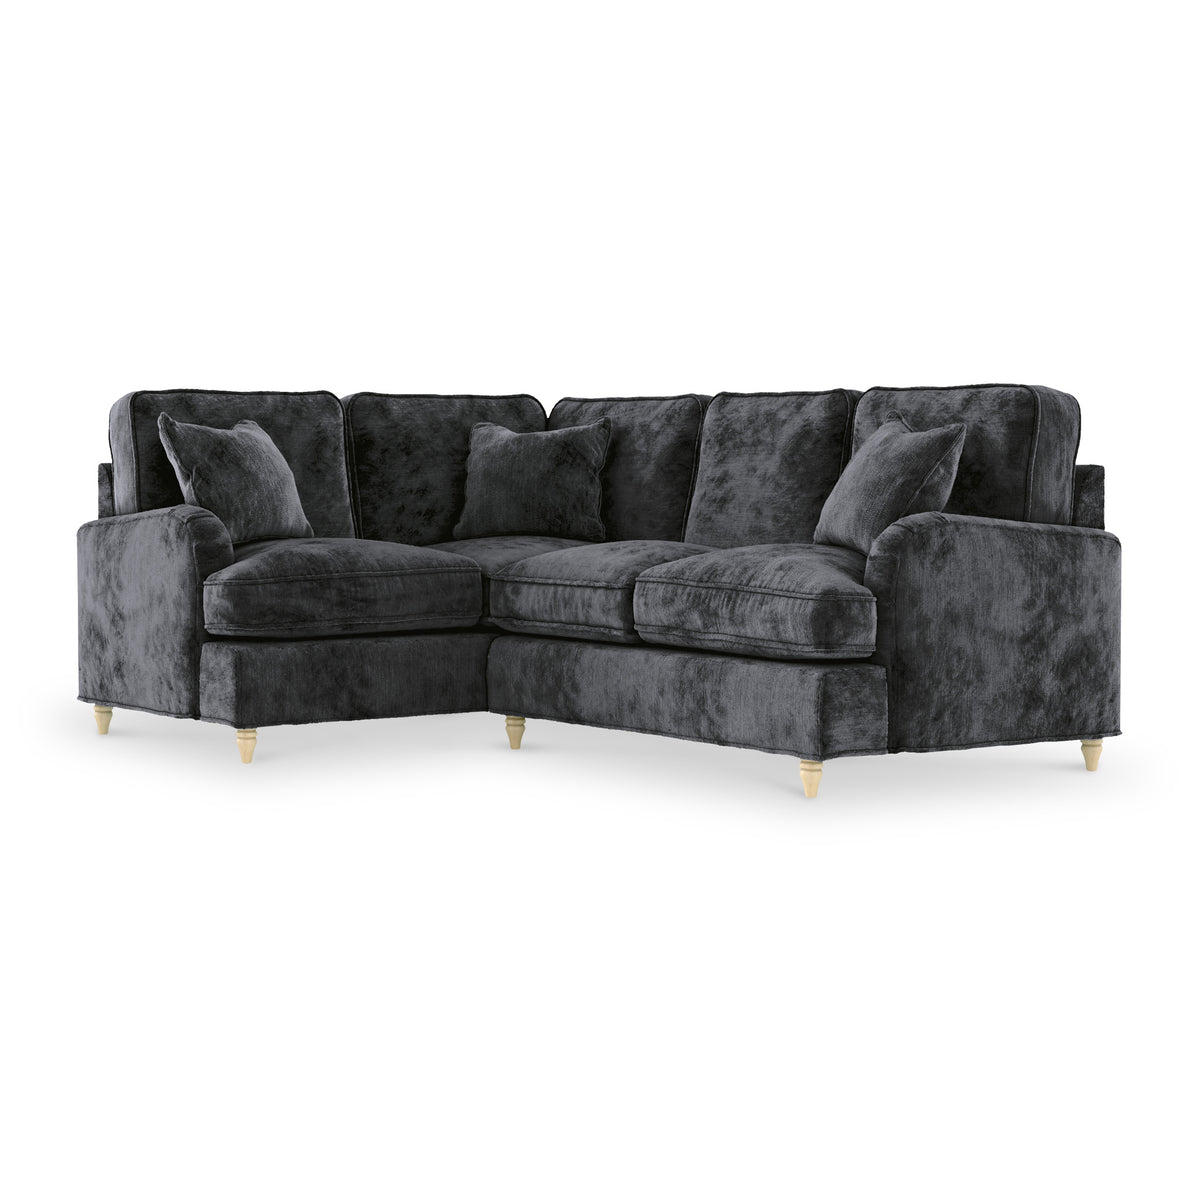 Arthur Charcoal LH Corner Sofa from Roseland Furniture